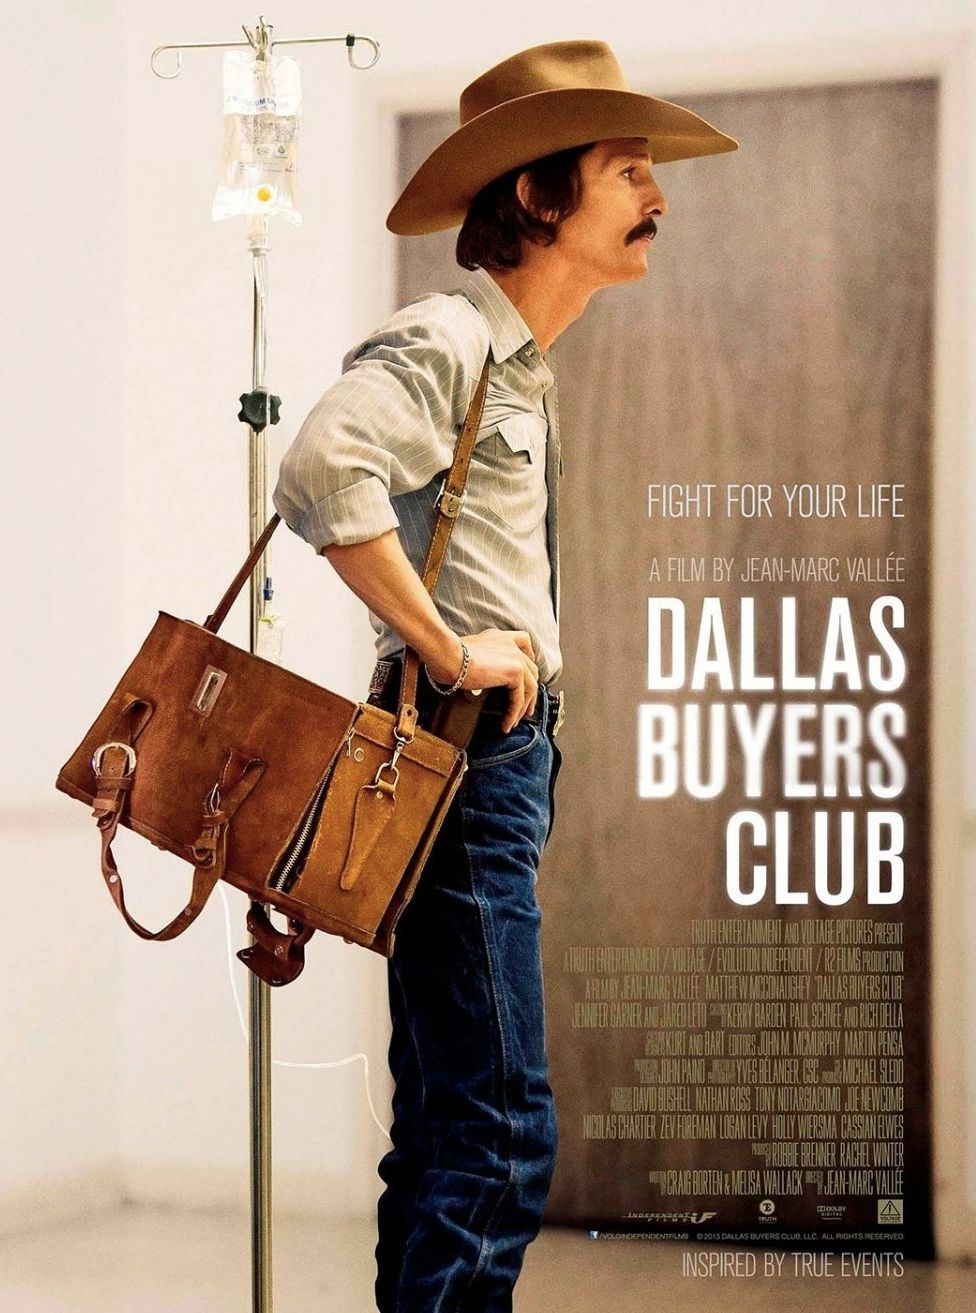 Matthew McConaughey as Ron Woodroof in Dallas Buyers Club